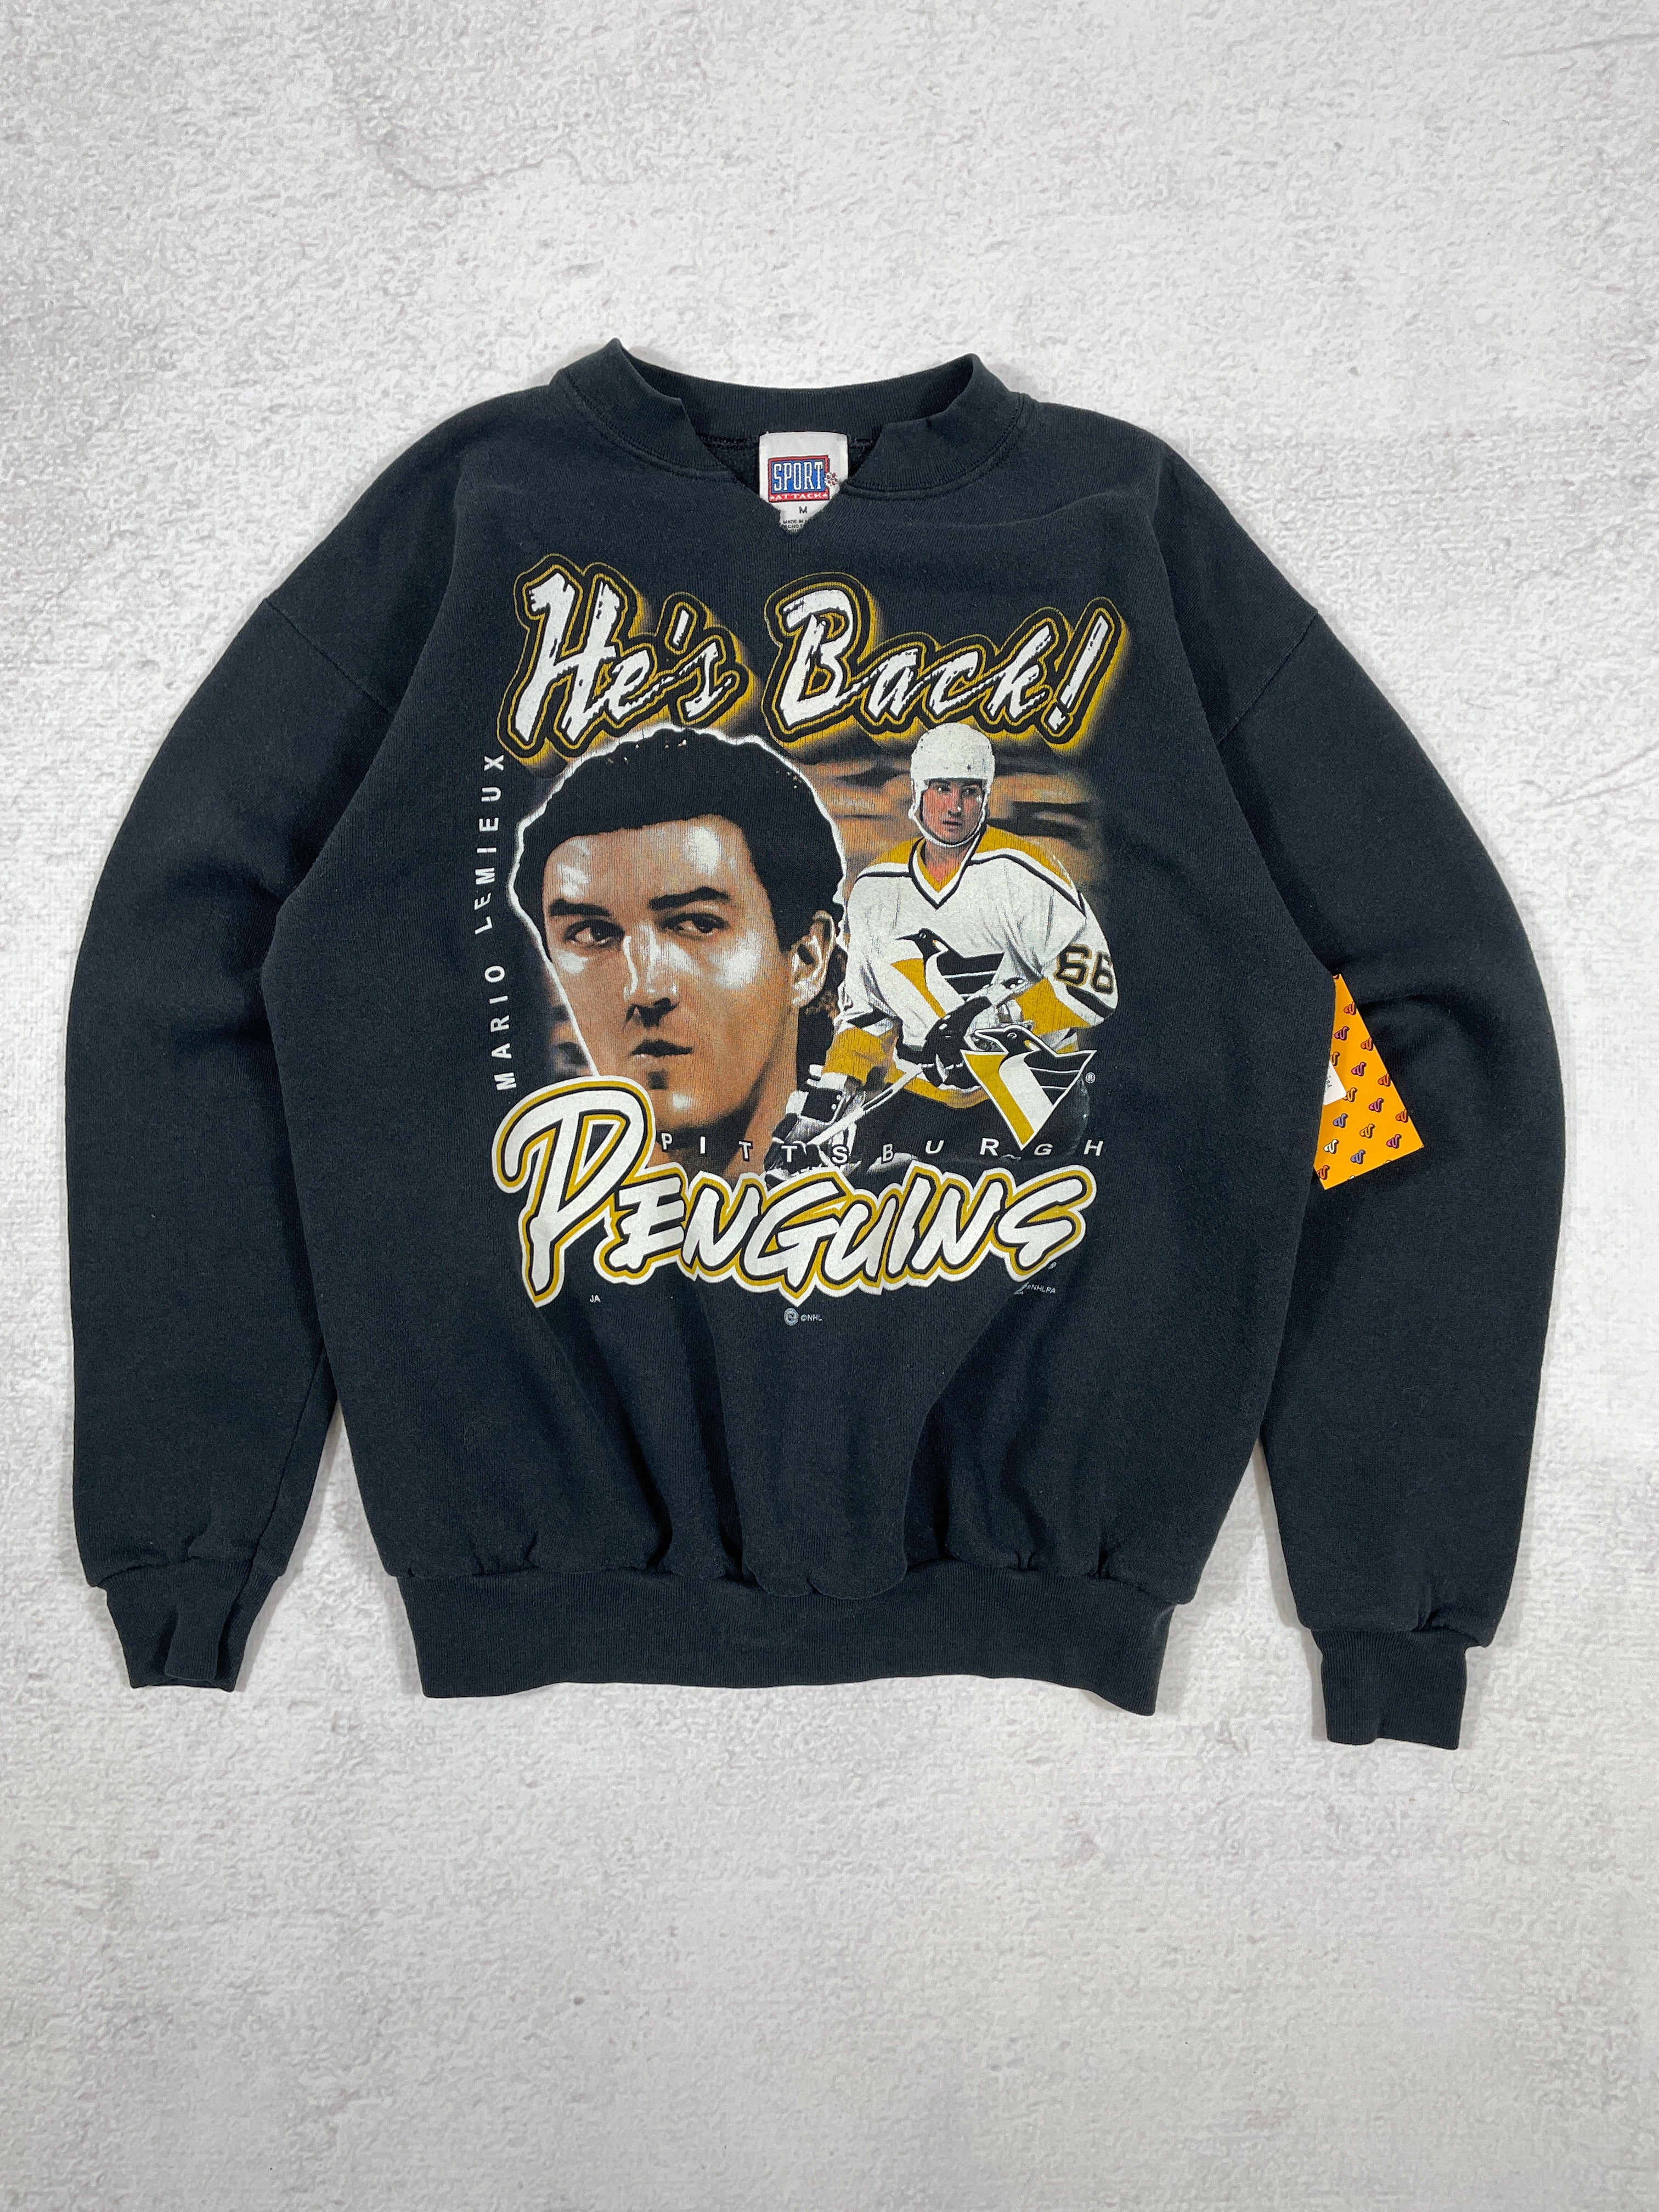 Vintage NHL Pittsburgh Penguins Mario Lemieux Sweatshirt - Men's Small